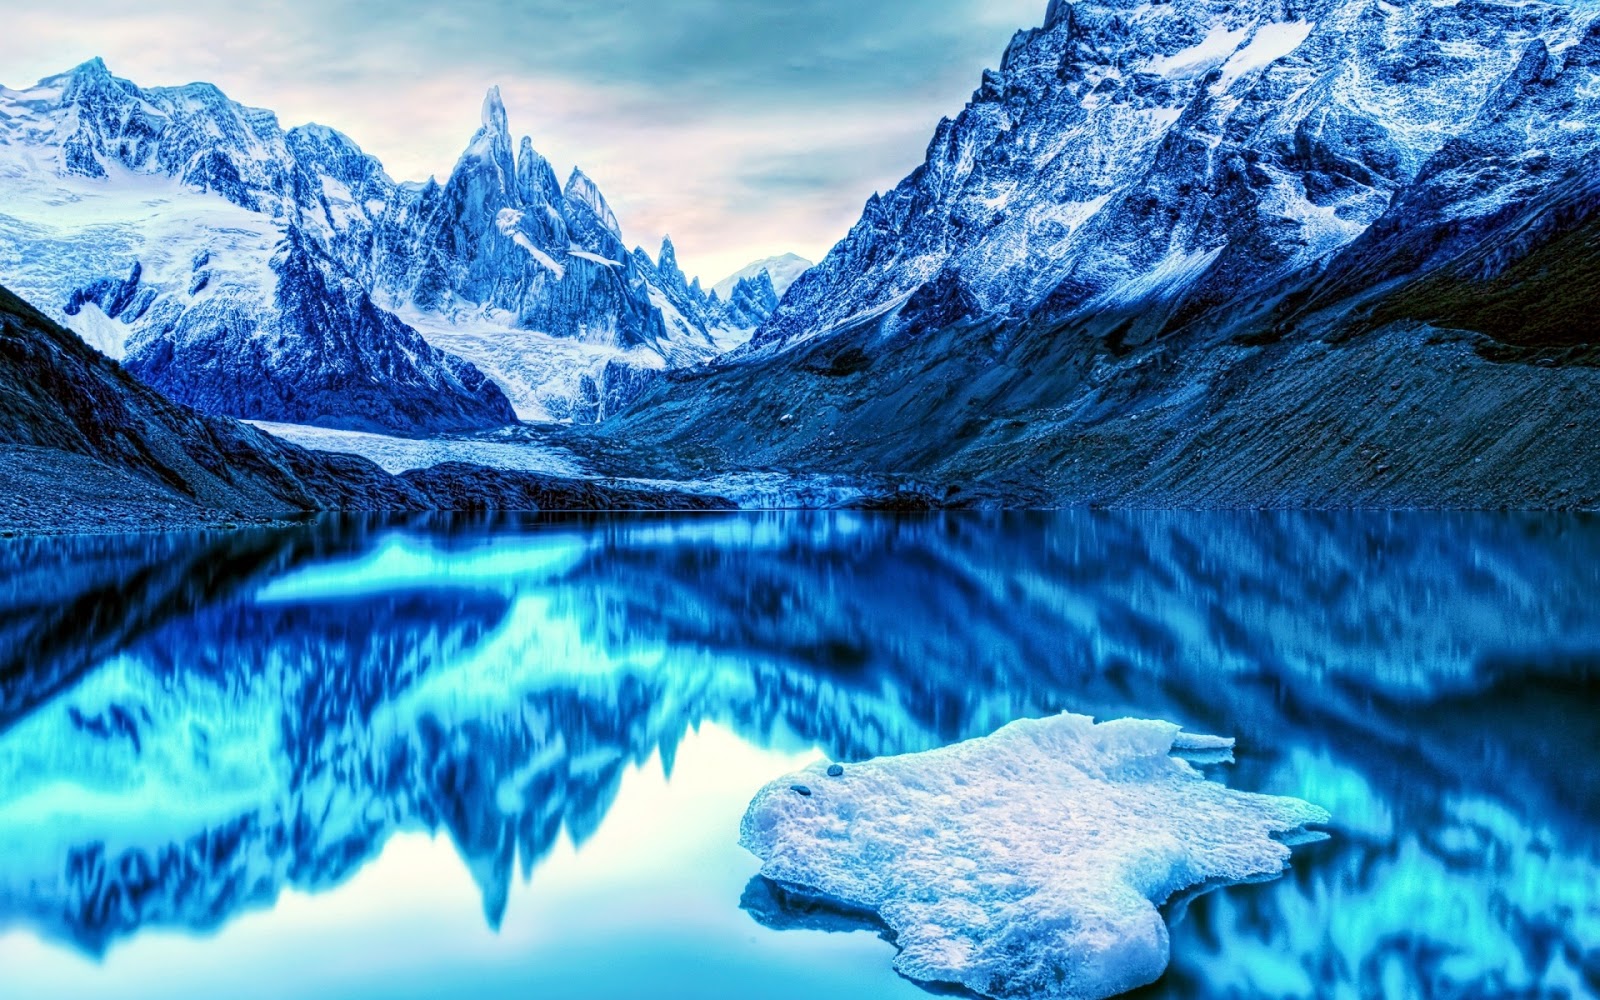 https://4.bp.blogspot.com/-B2DfOjCi-5k/UMXnv-TGM5I/AAAAAAAARzA/Ece5d5oNeGs/s1600/winter+blue+landscape+mountain+lake.jpg